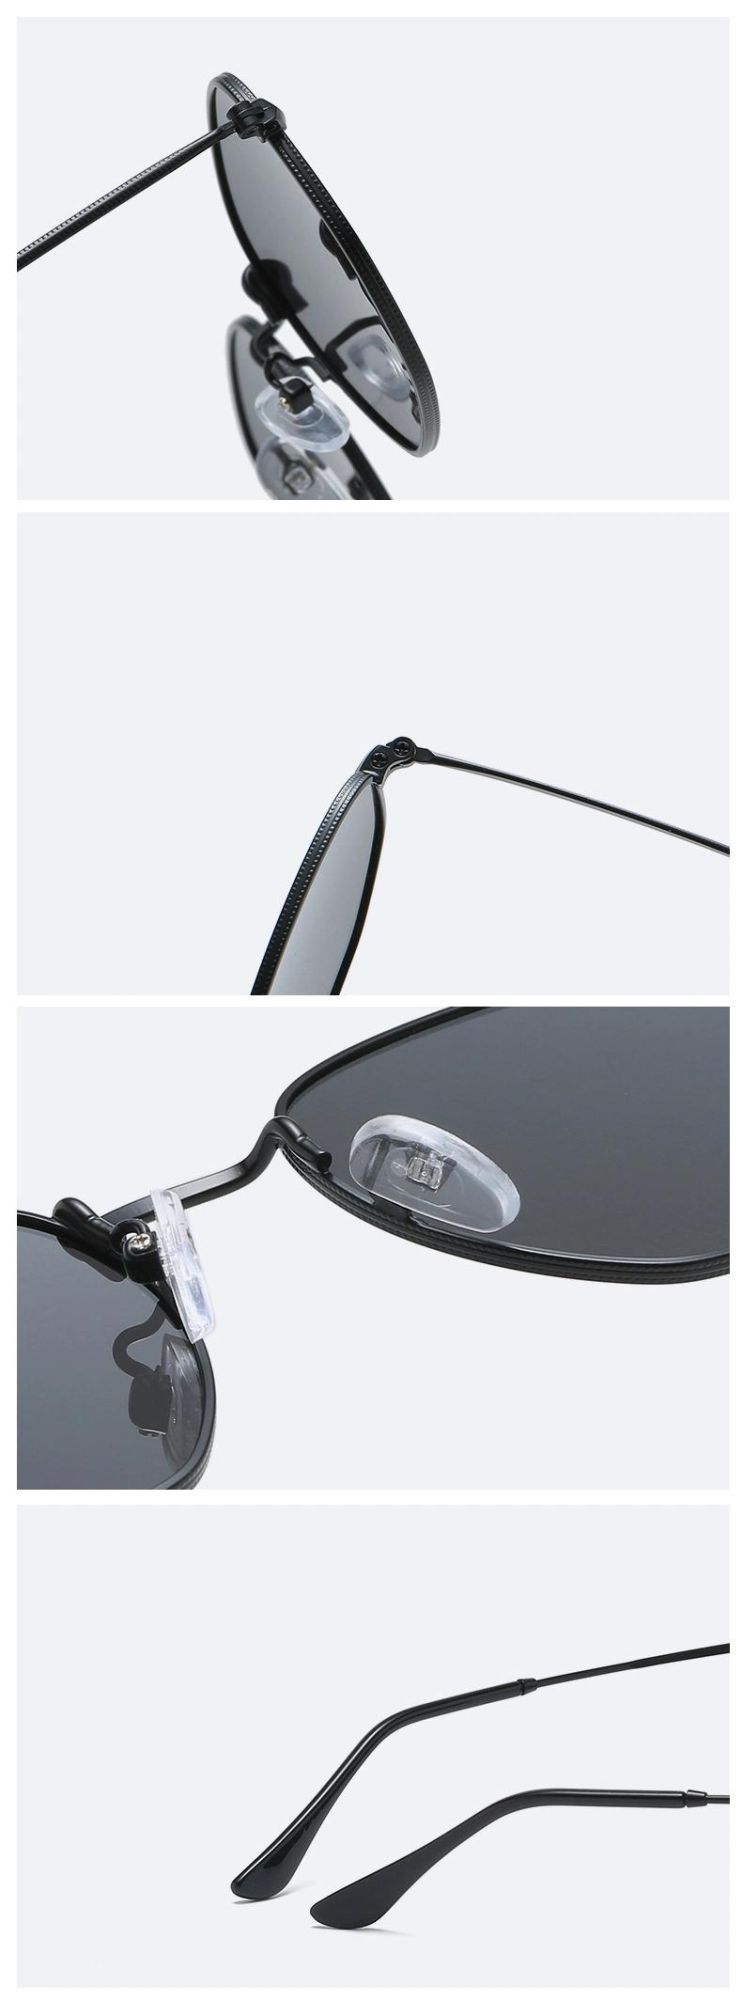 2022 High Quality New Design Sun Glasses Fashion Retro Ladies Tac Lens Polygonal Metal Frame UV400 Outdoor Sunglasses